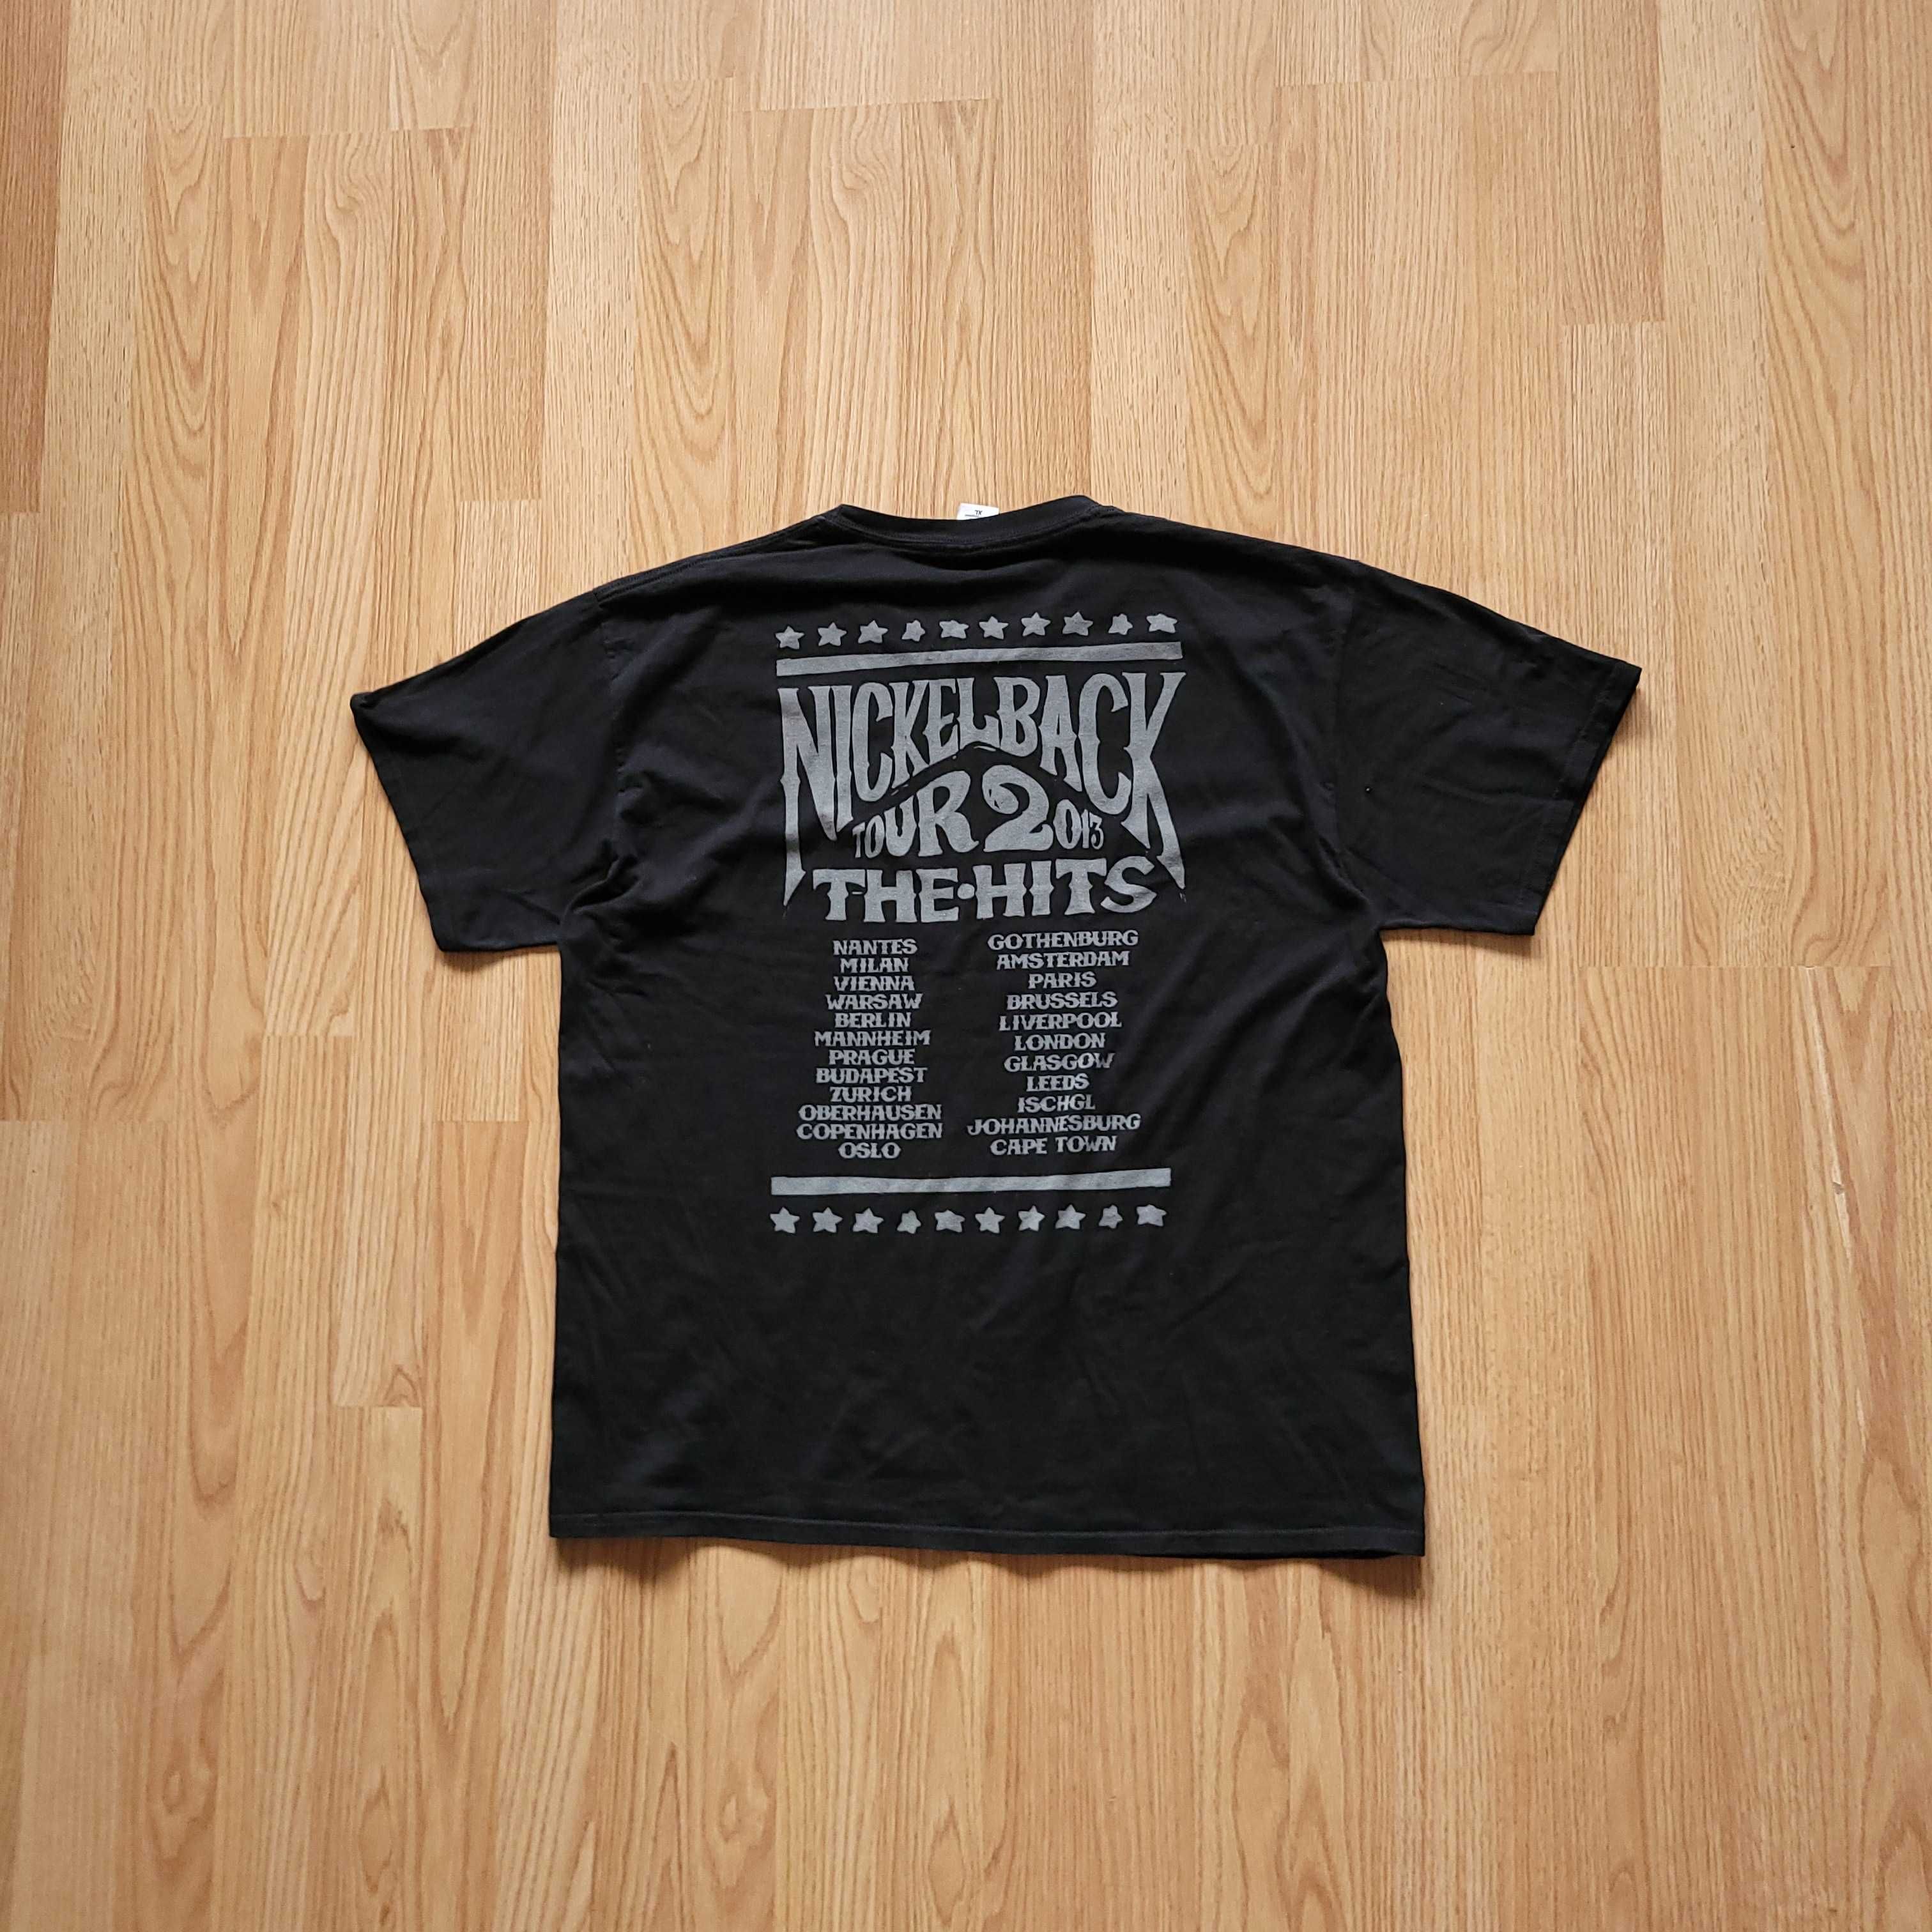 T-shirt Nickelback 2013 Tour XL